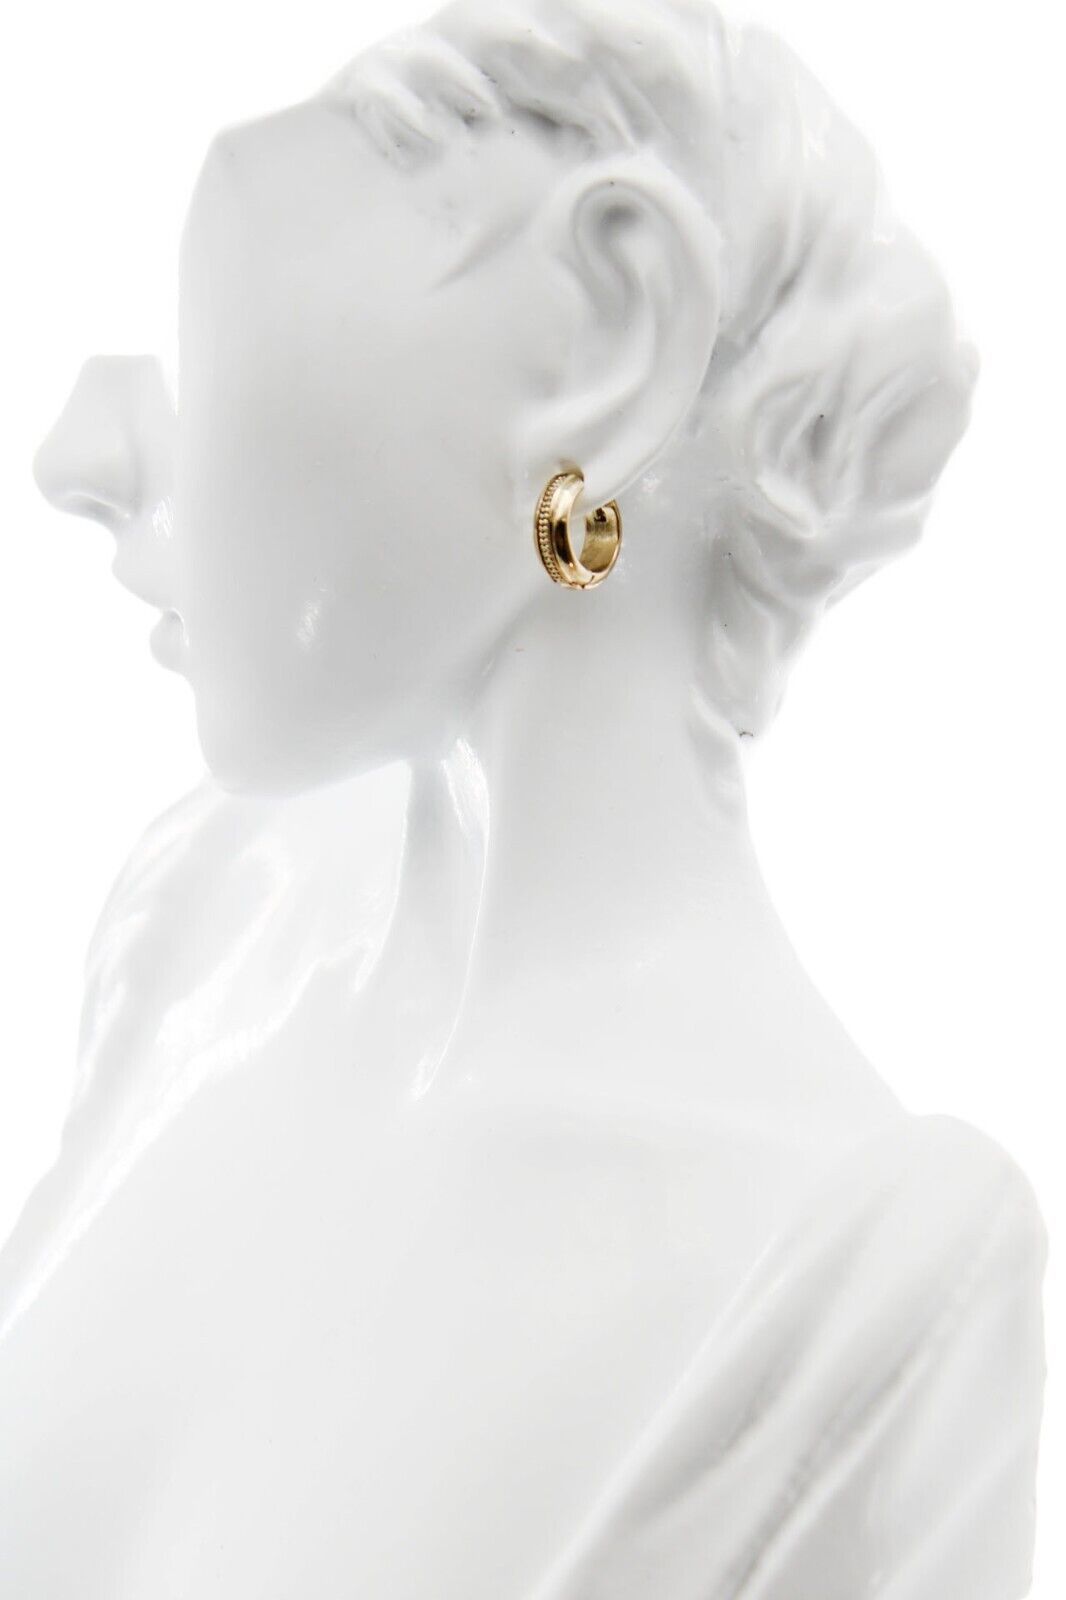 ANNE KLEIN Gold Plated Textured Mini Huggie Small Hoop Earrings - $9.89